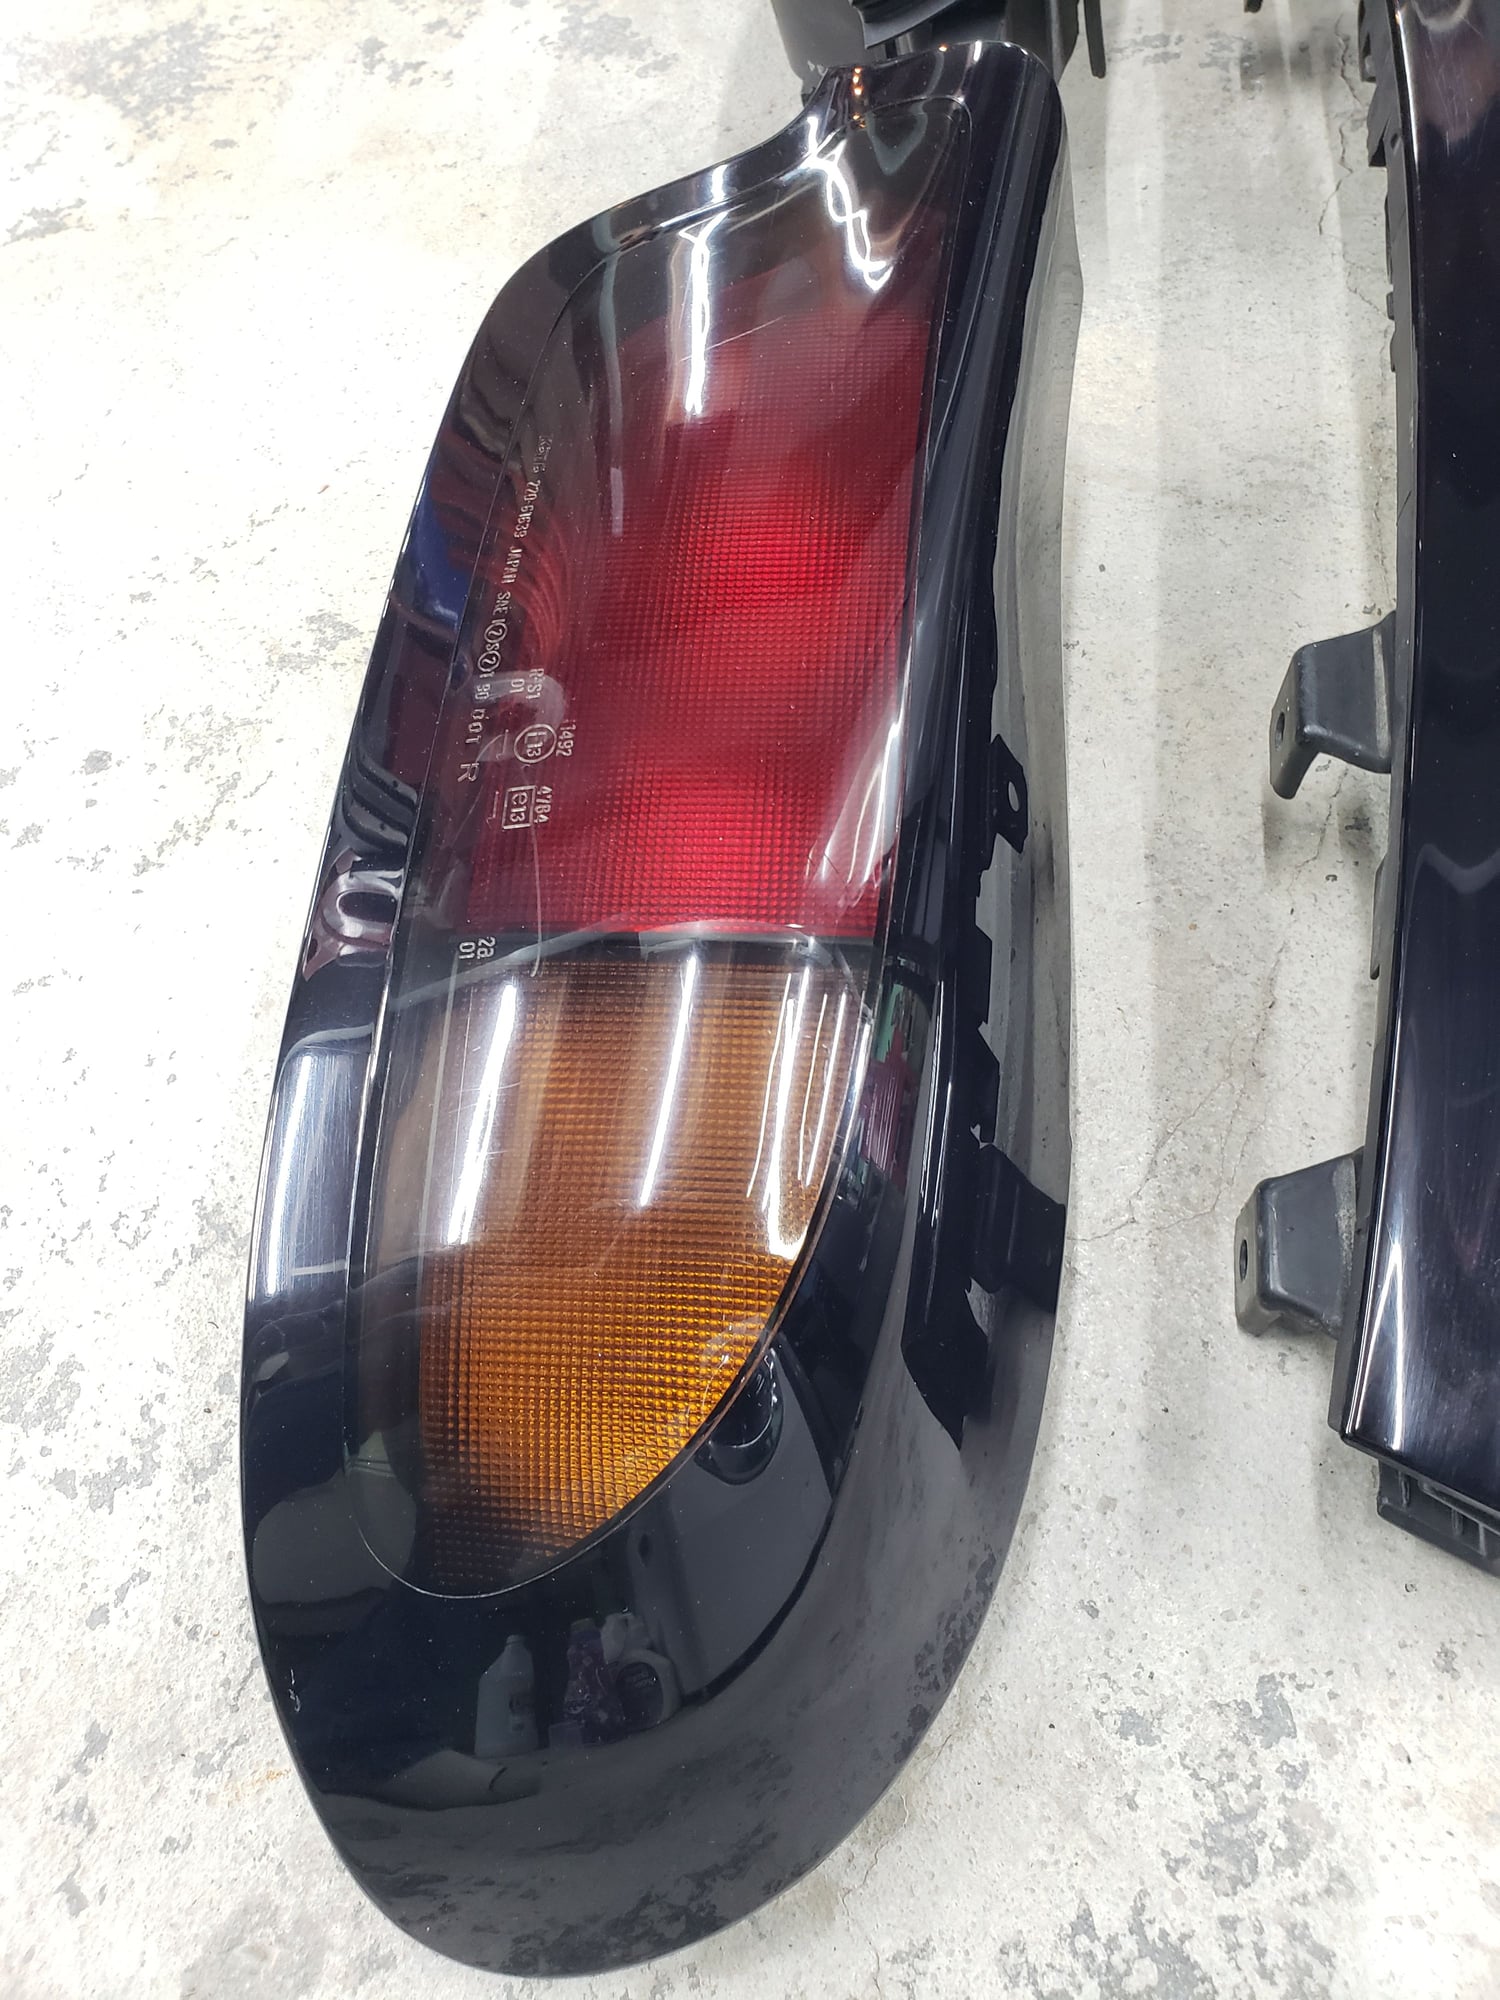 Lights - FD3S tail light set - Used - 1992 to 1998 Mazda RX-7 - Binghamton, NY 13903, United States